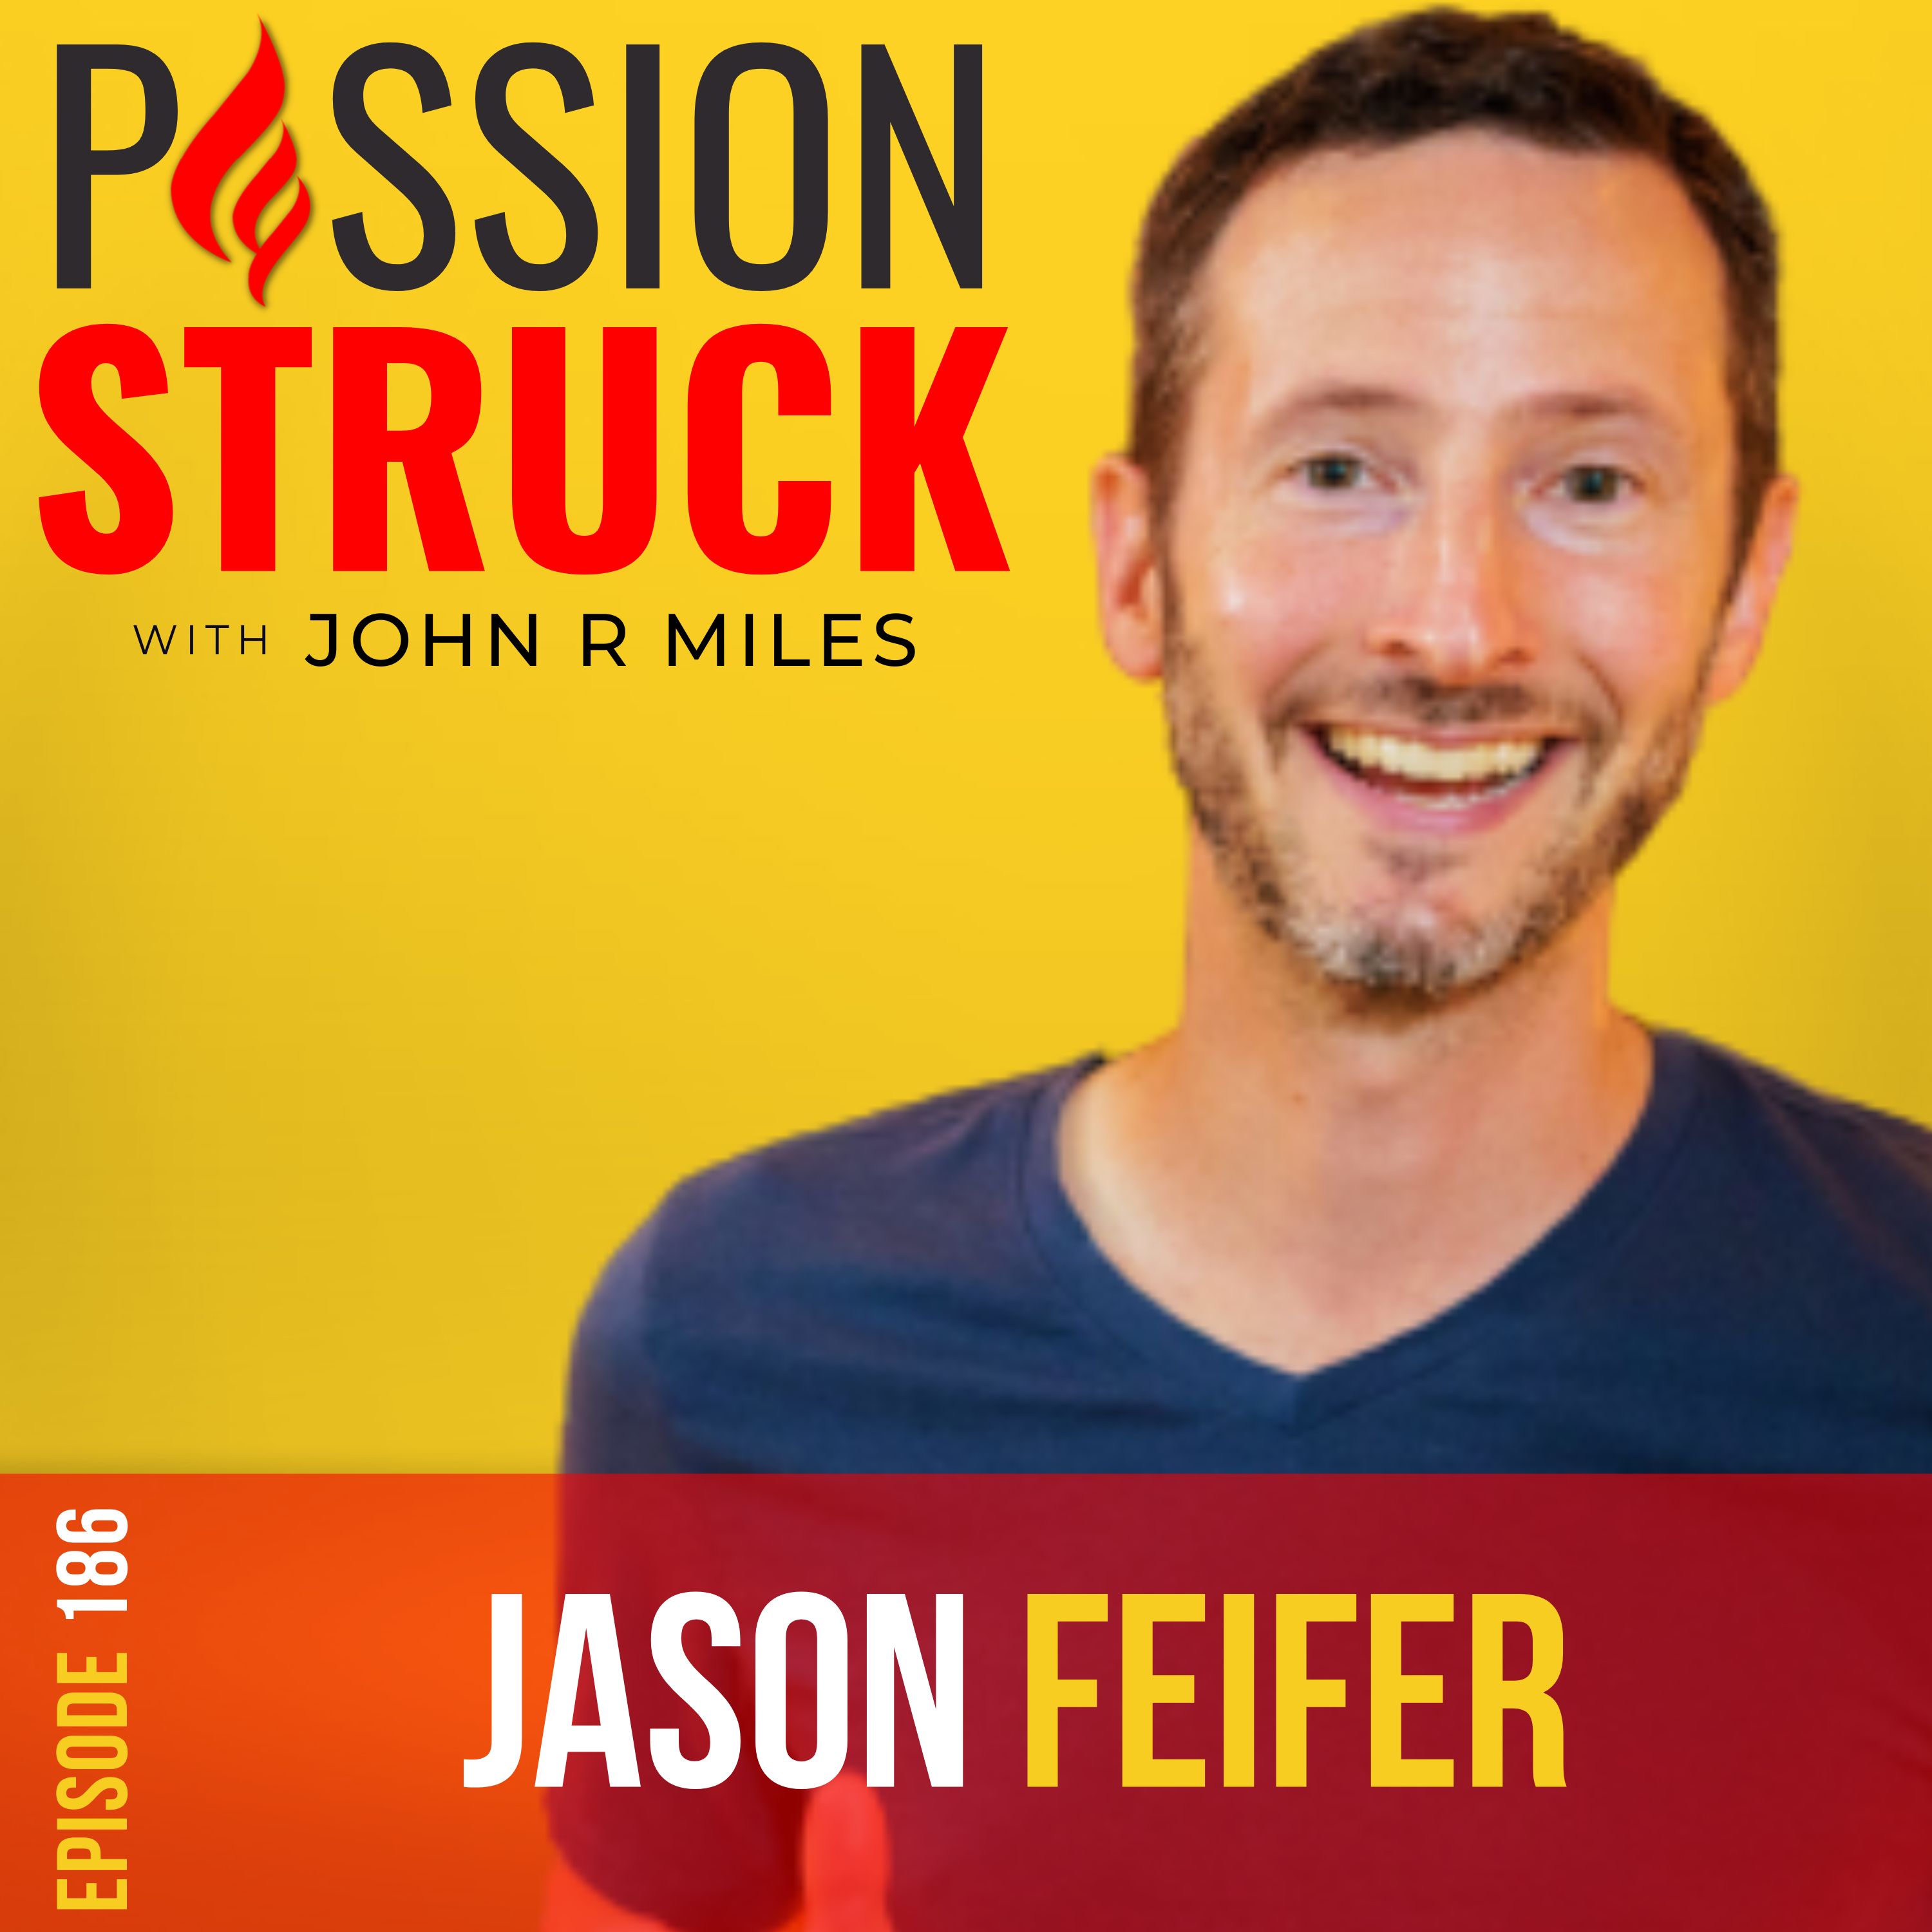 Passion Struck with John R. Miles album cover episode 186 with Jason Feifer, editor of entrepreneur magazine